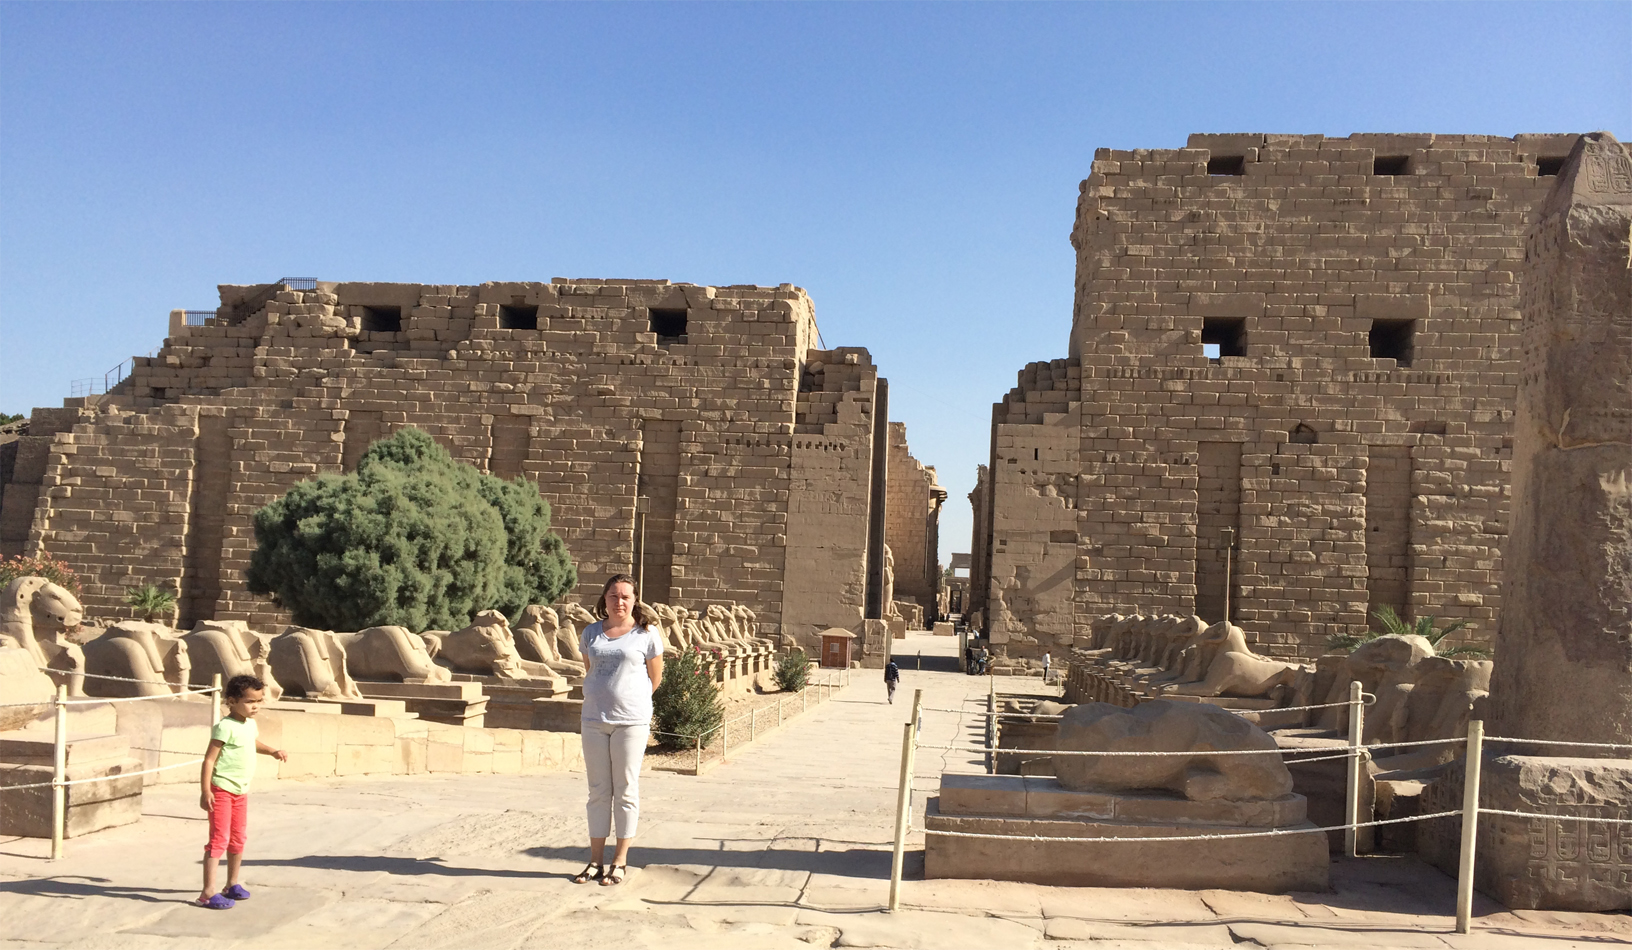 
Entrance into Karnak temple